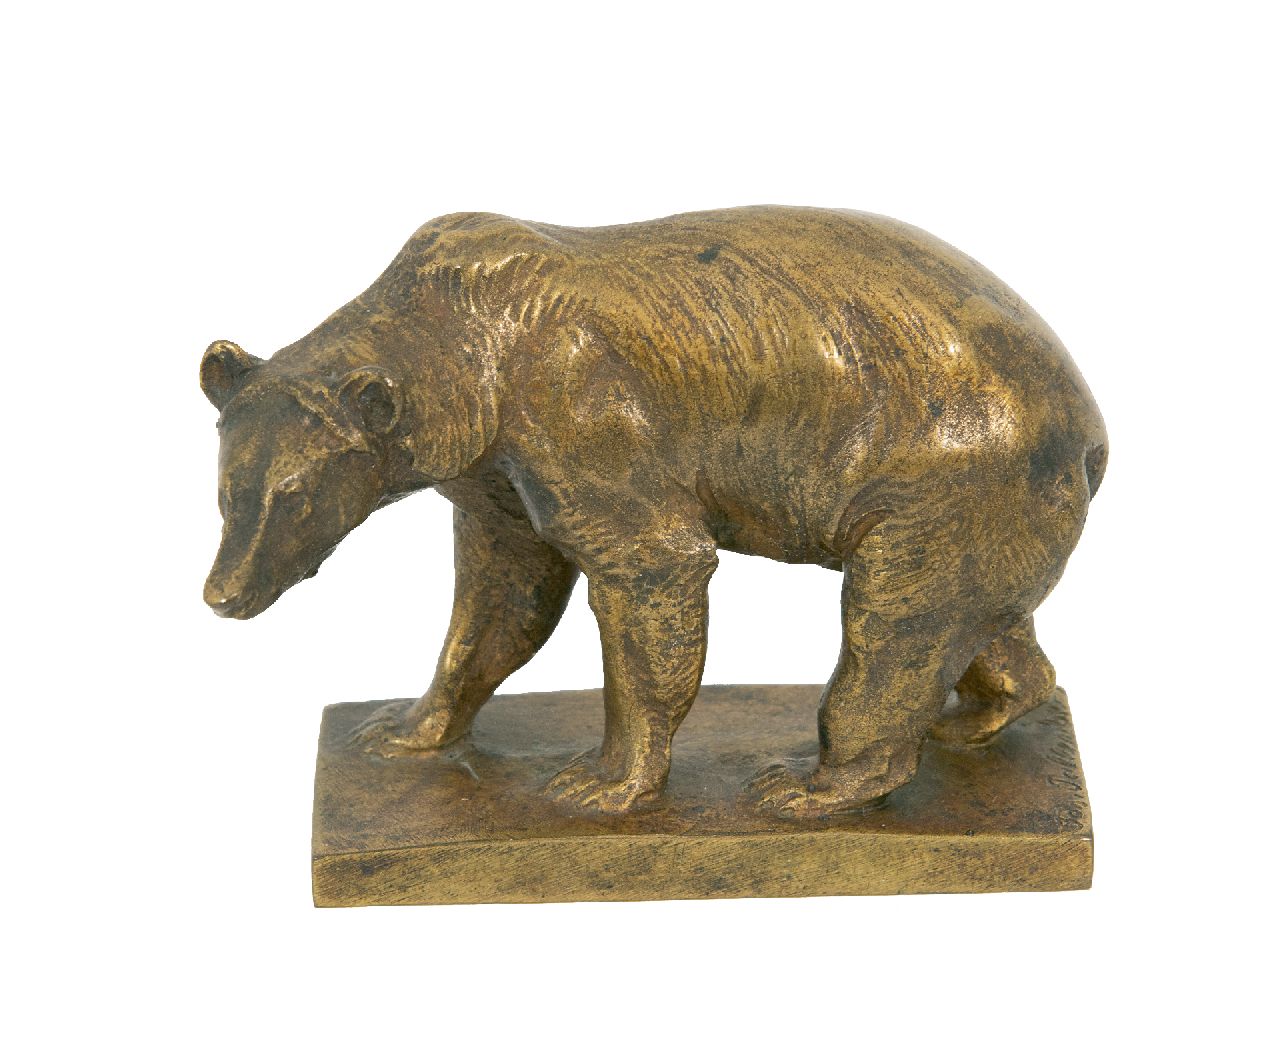 Pallenberg J.F.  | Josef Franz Pallenberg | Sculptures and objects offered for sale | Walking bear, bronze 7.0 x 9.0 cm, signed on the base